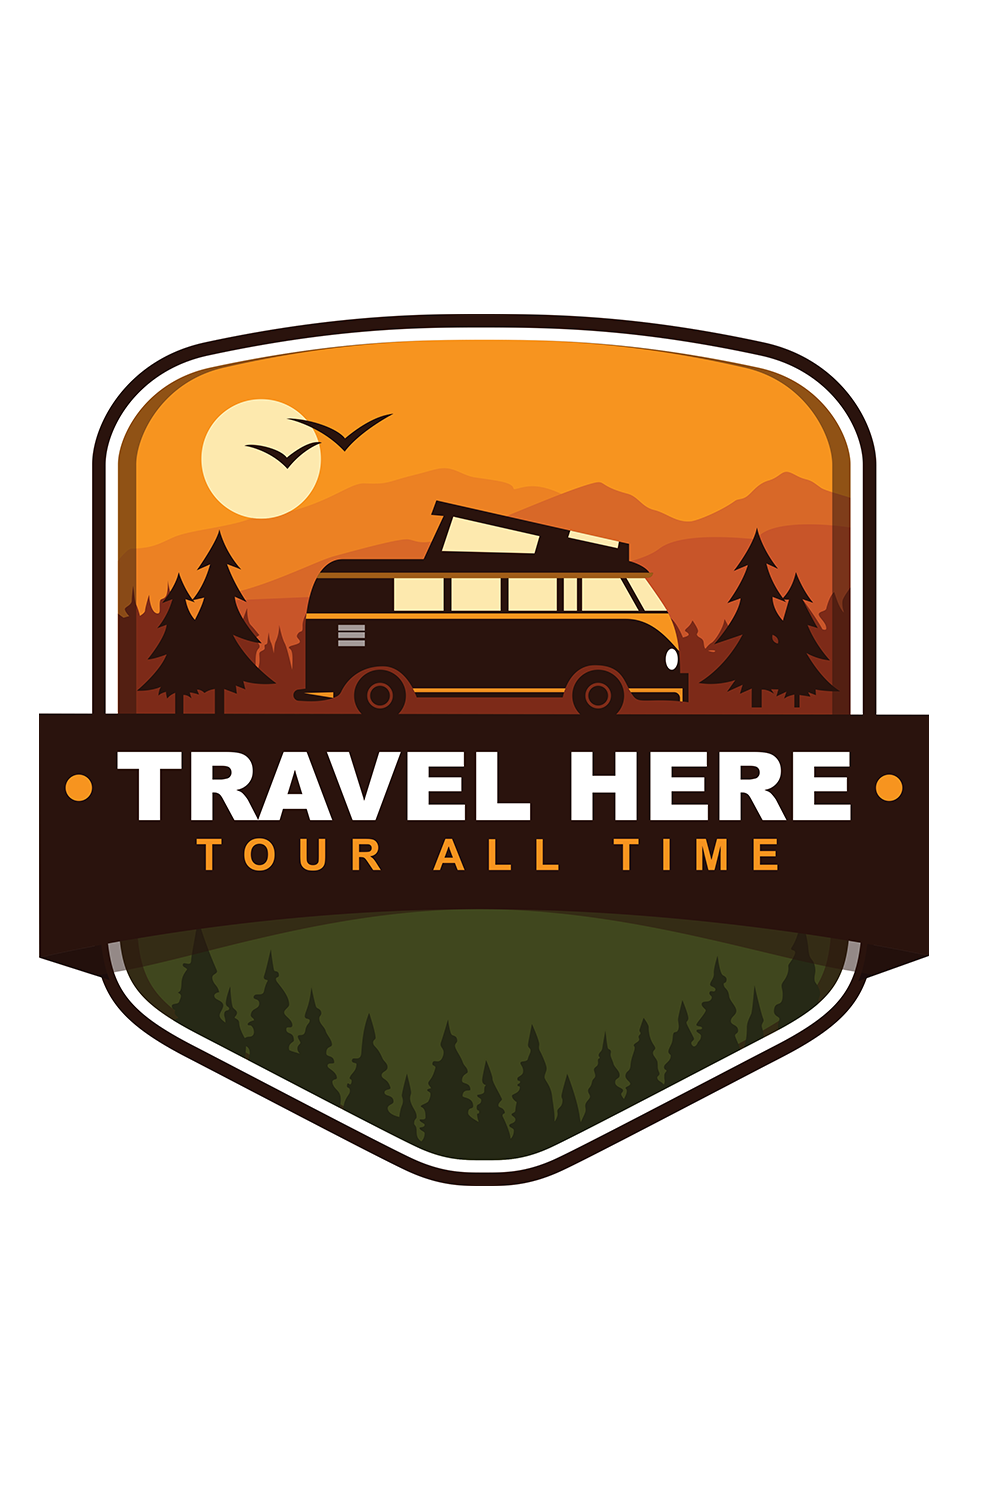 Travel logo pinterest preview image.